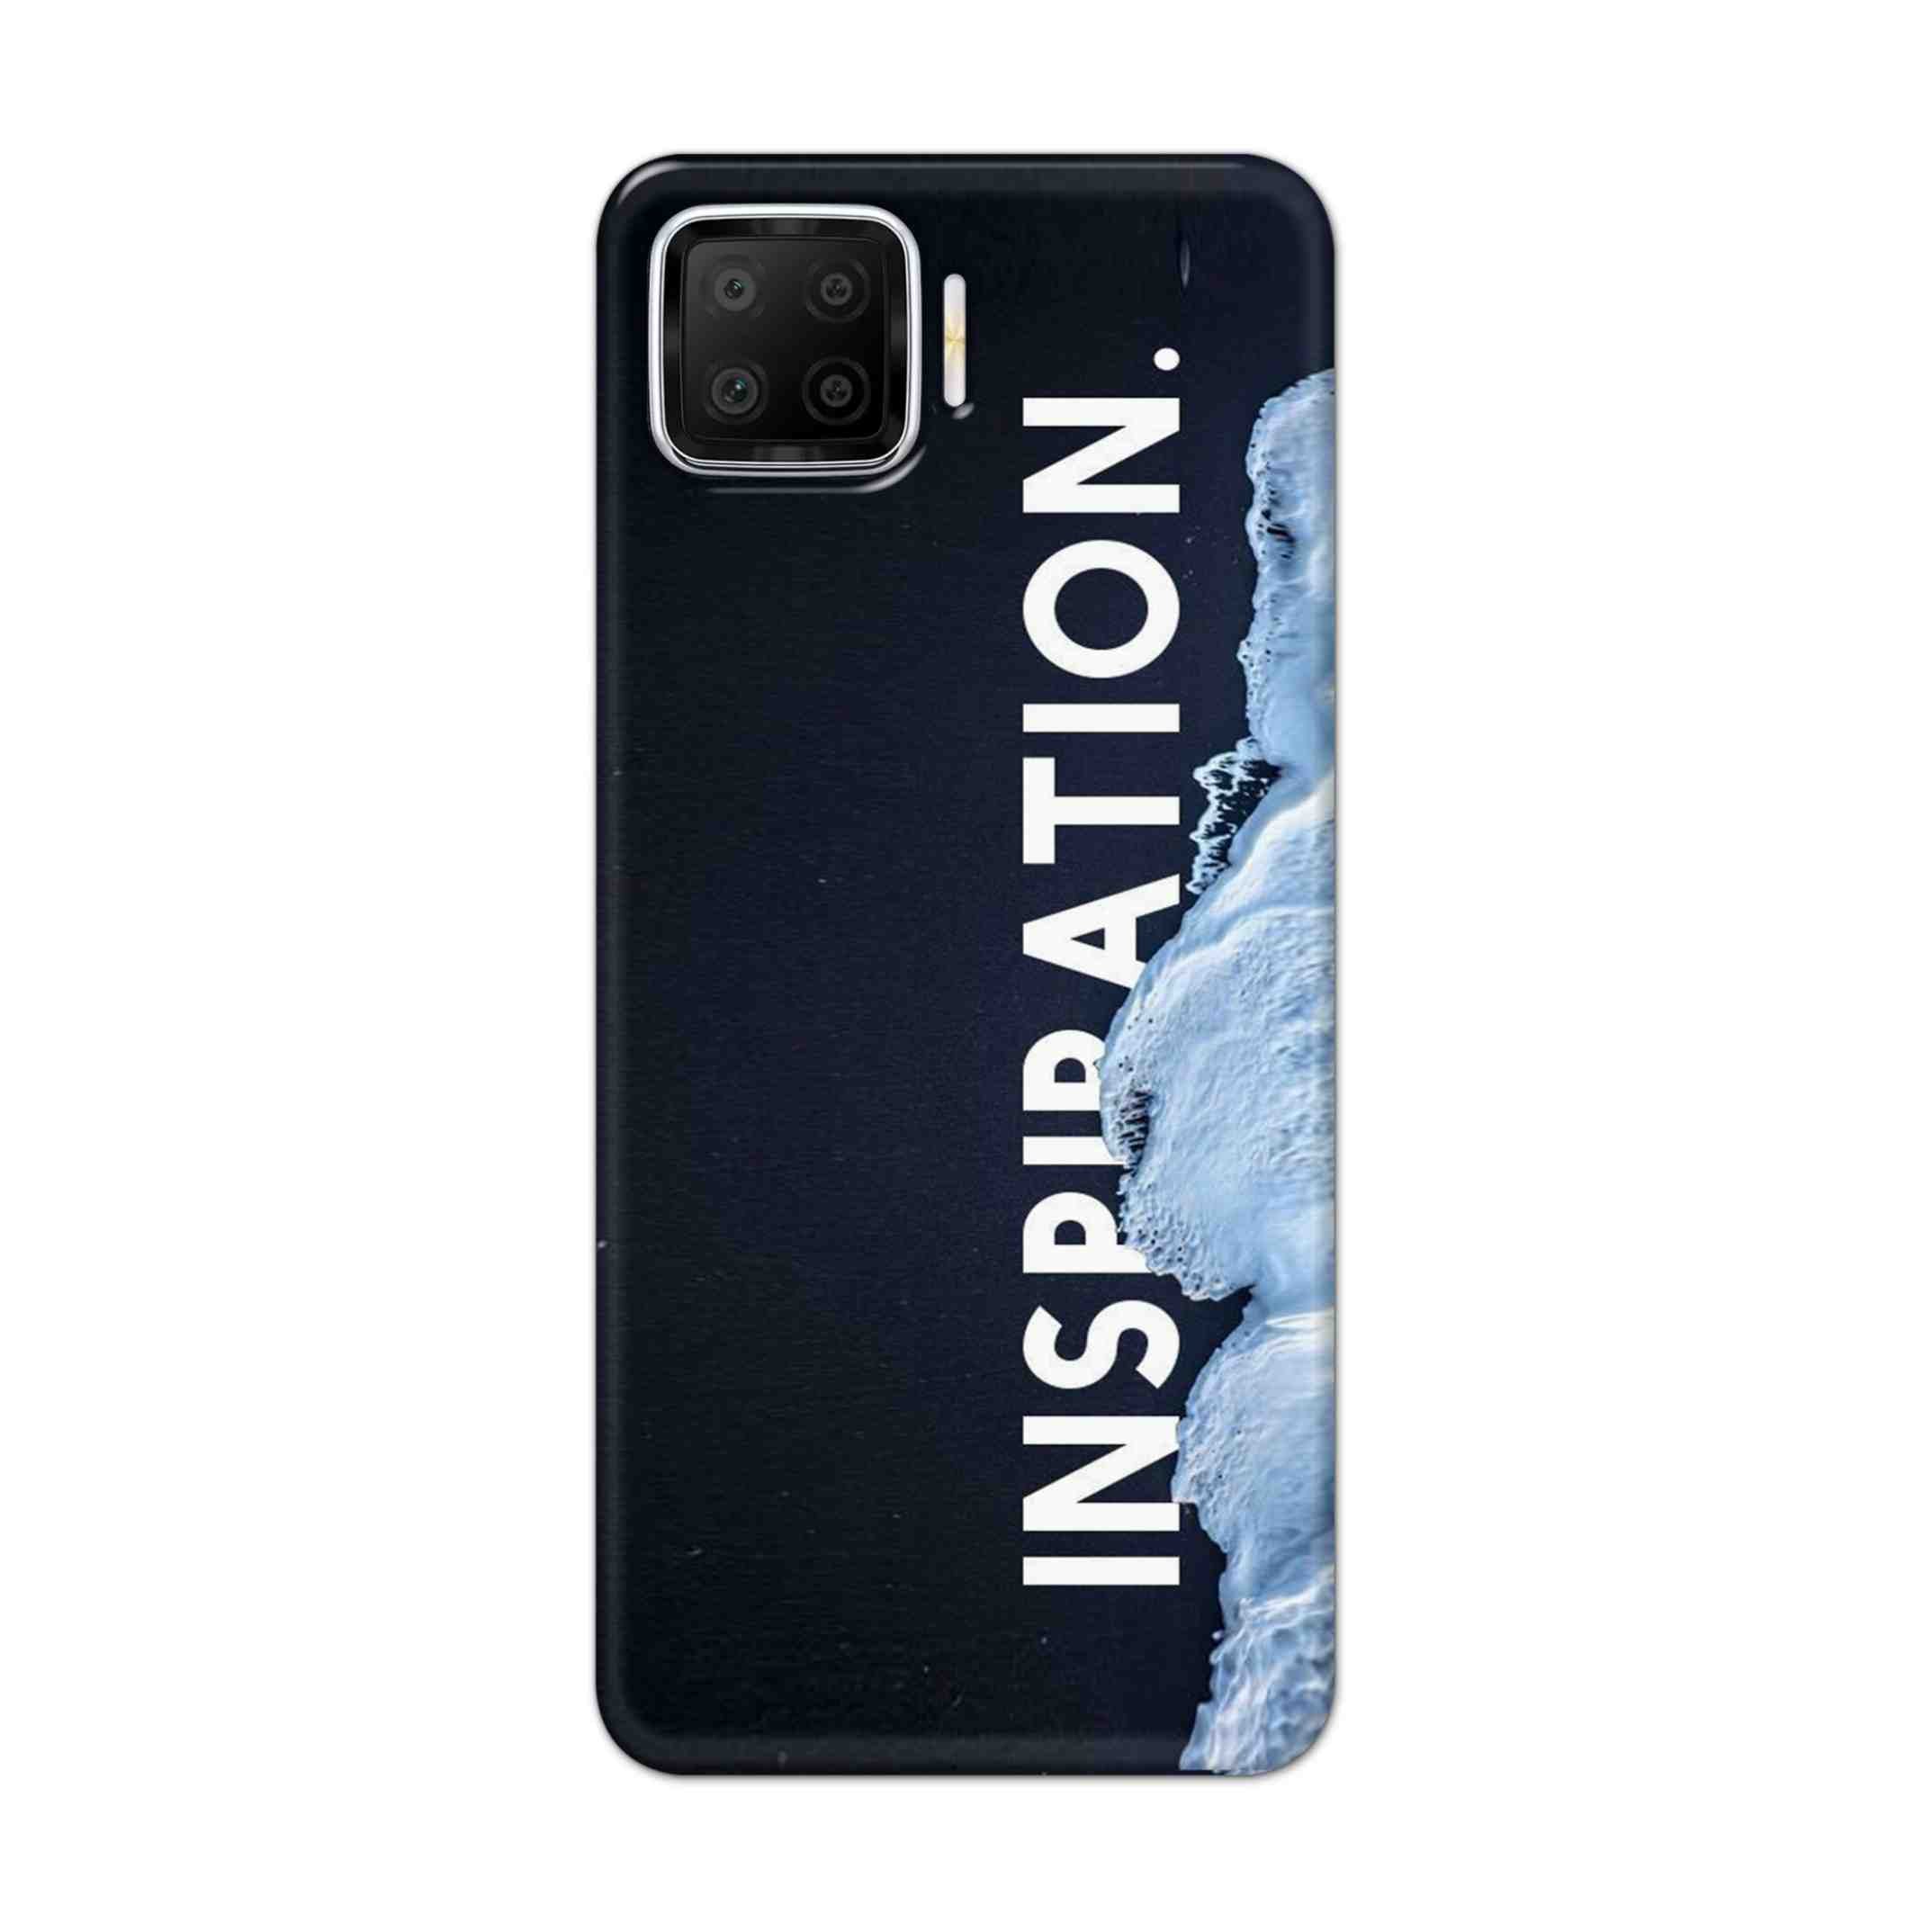 Buy Inspiration Hard Back Mobile Phone Case Cover For Oppo F17 Online